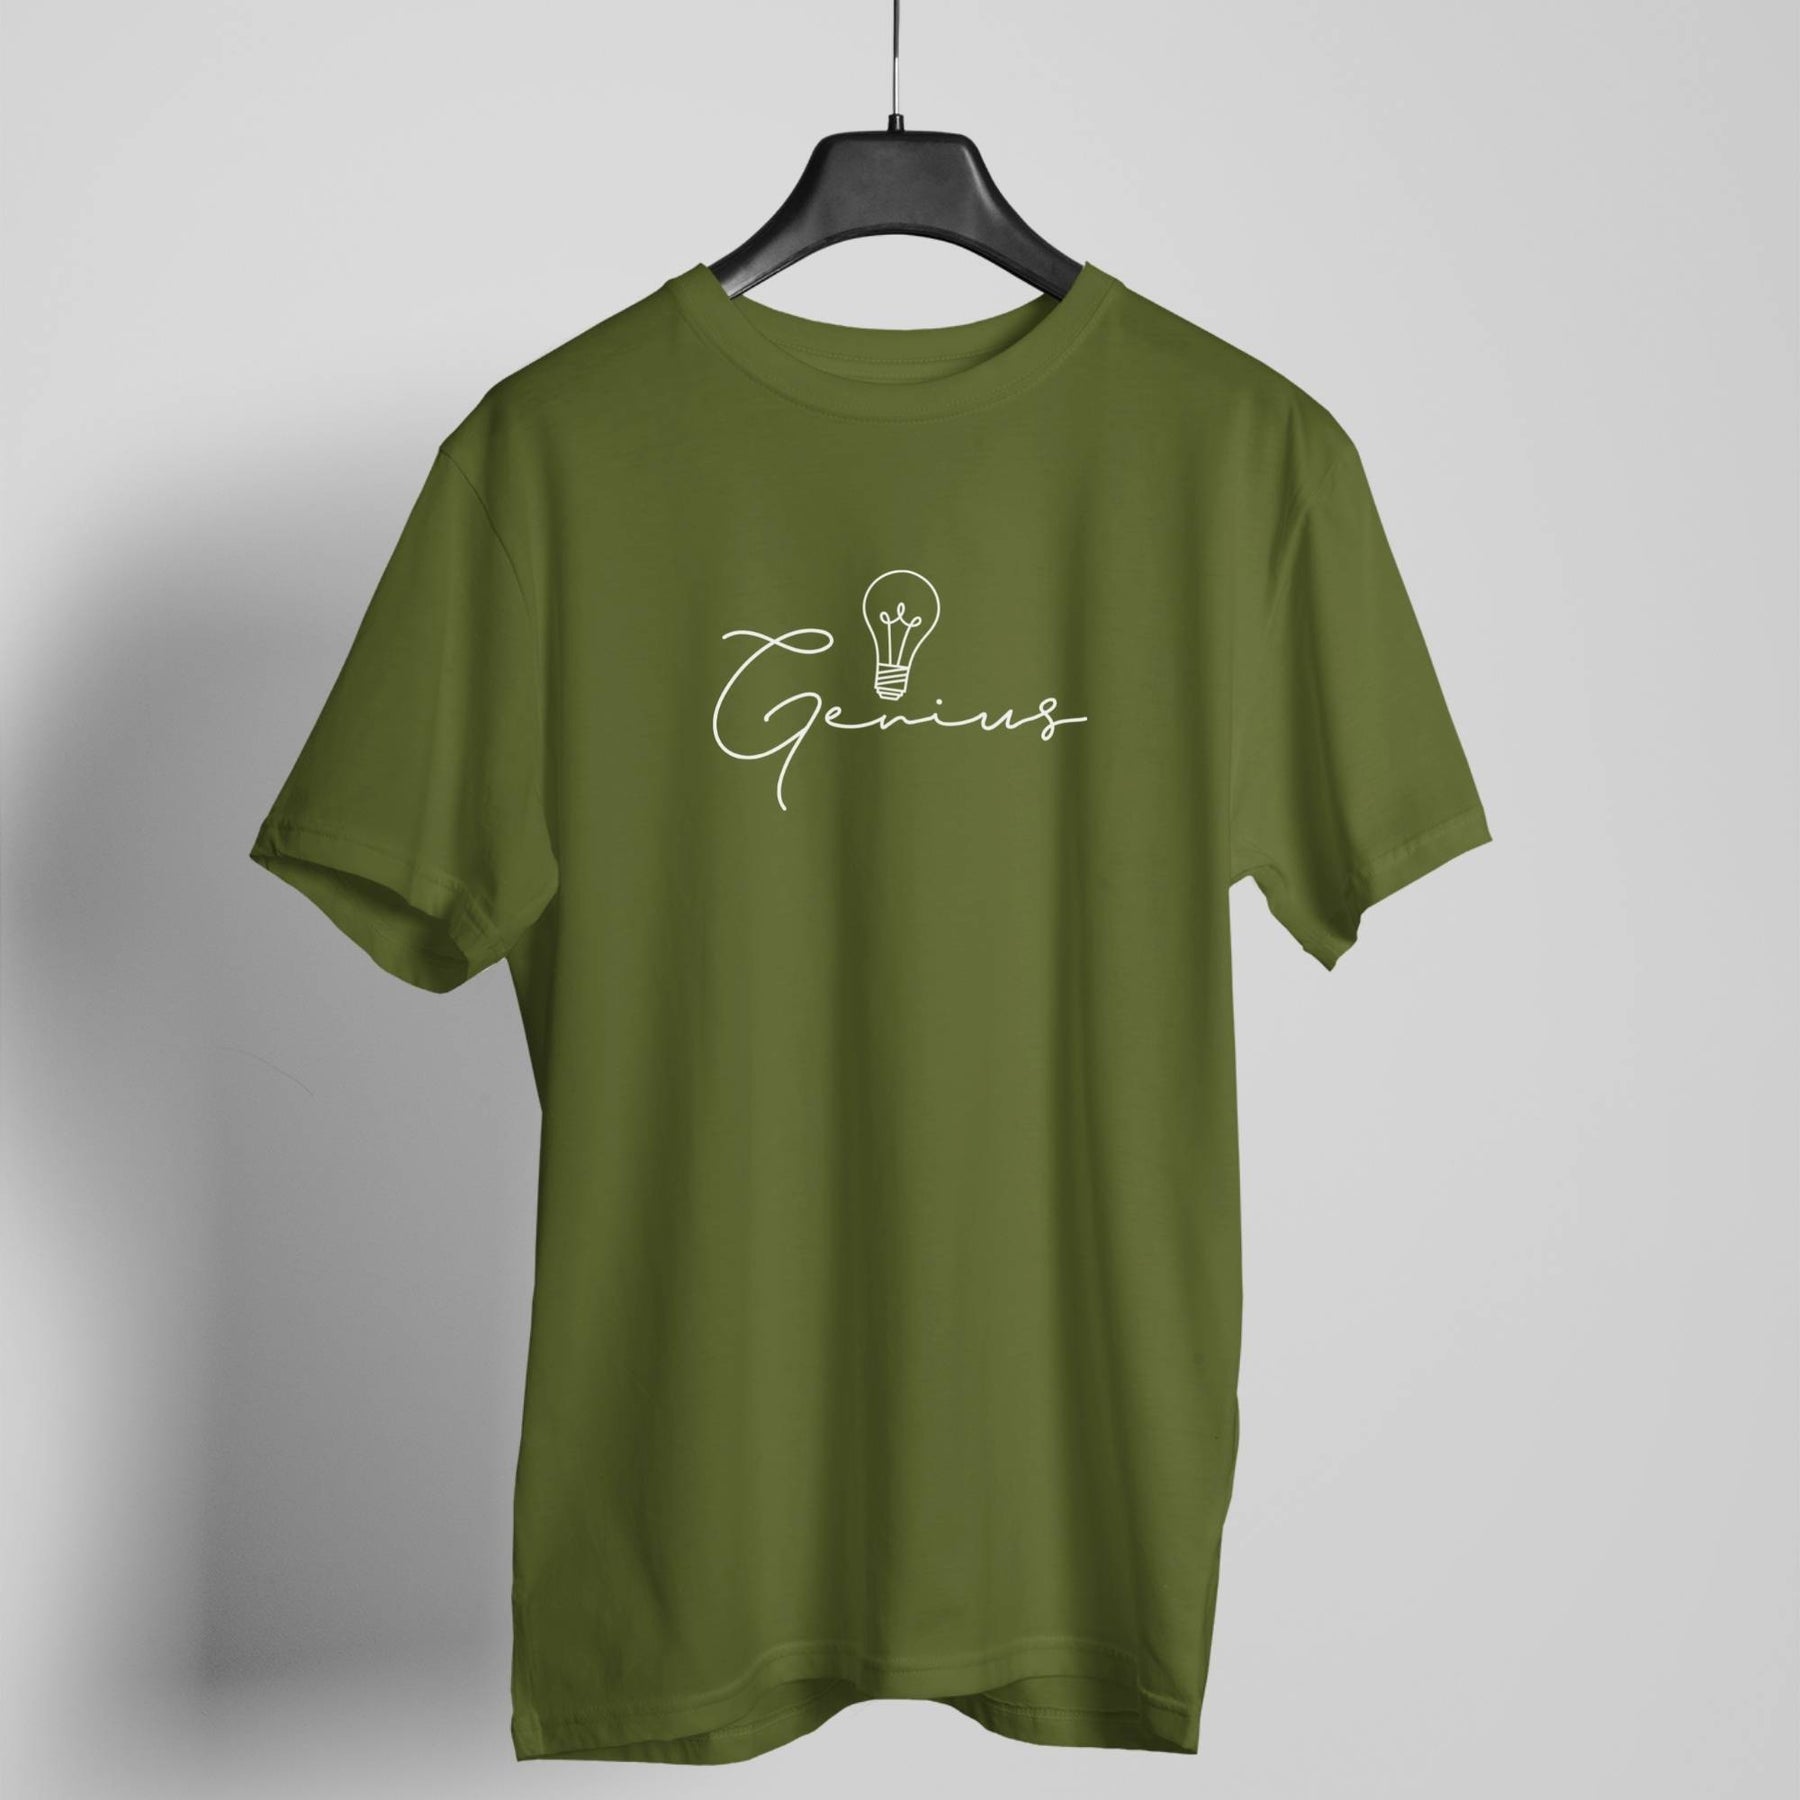 Genius olive green t-shirt